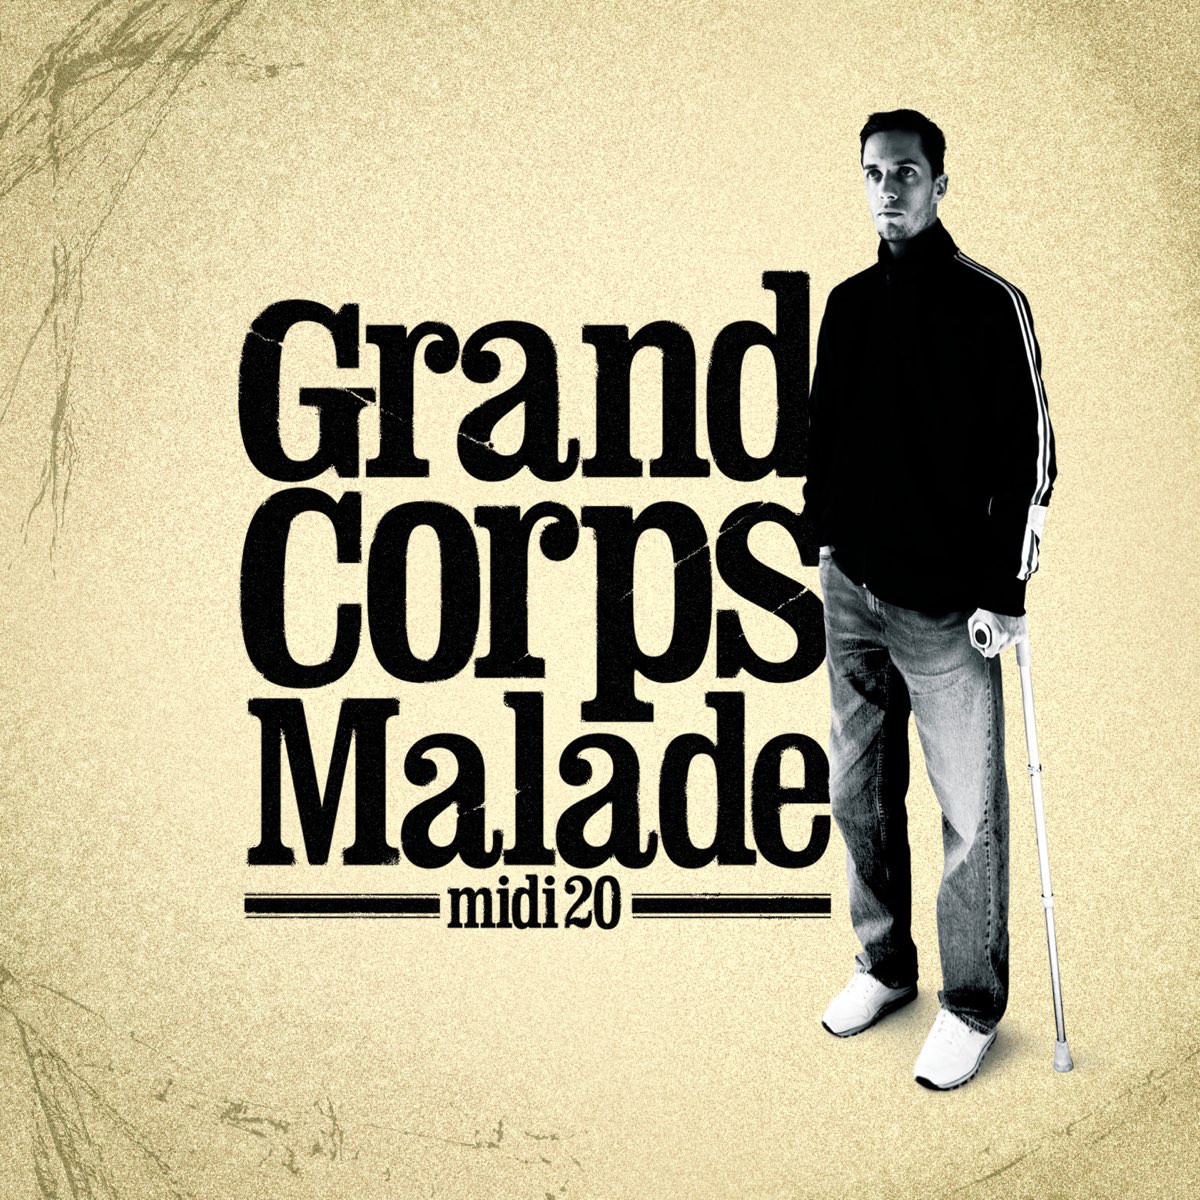 ‎Midi 20 - Album by Grand Corps Malade - Apple Music